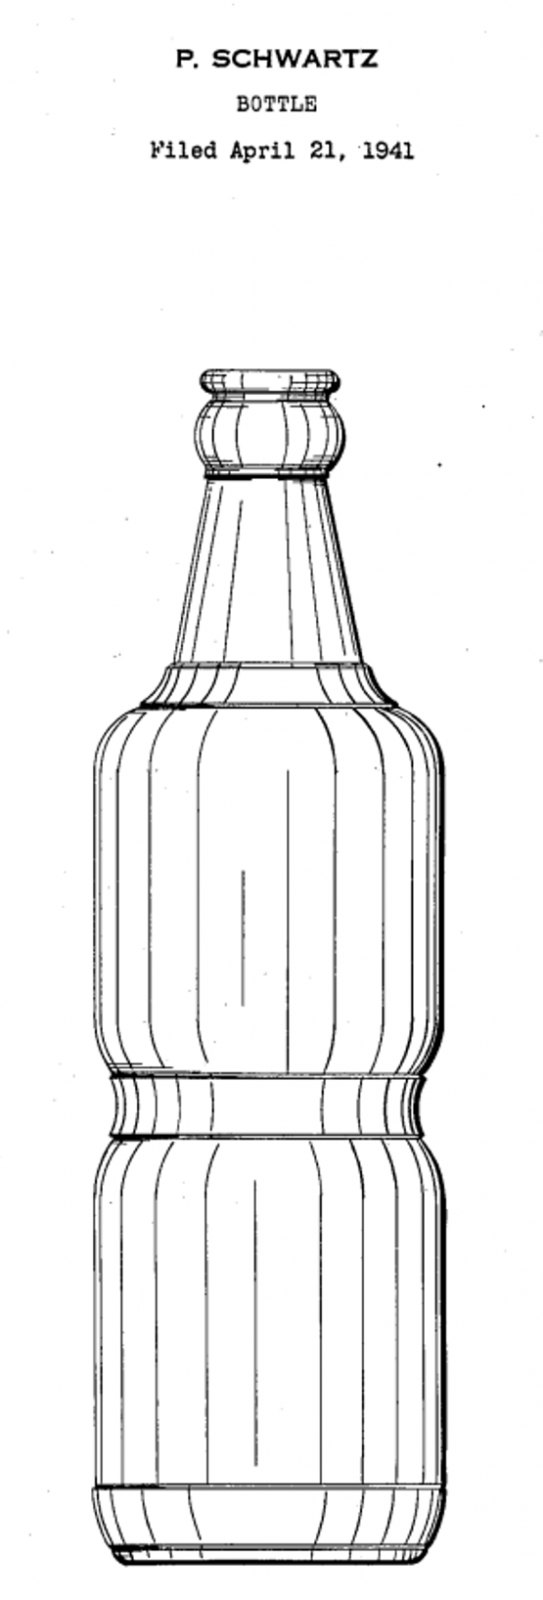 Schwartz Bottle Patent 1941.png